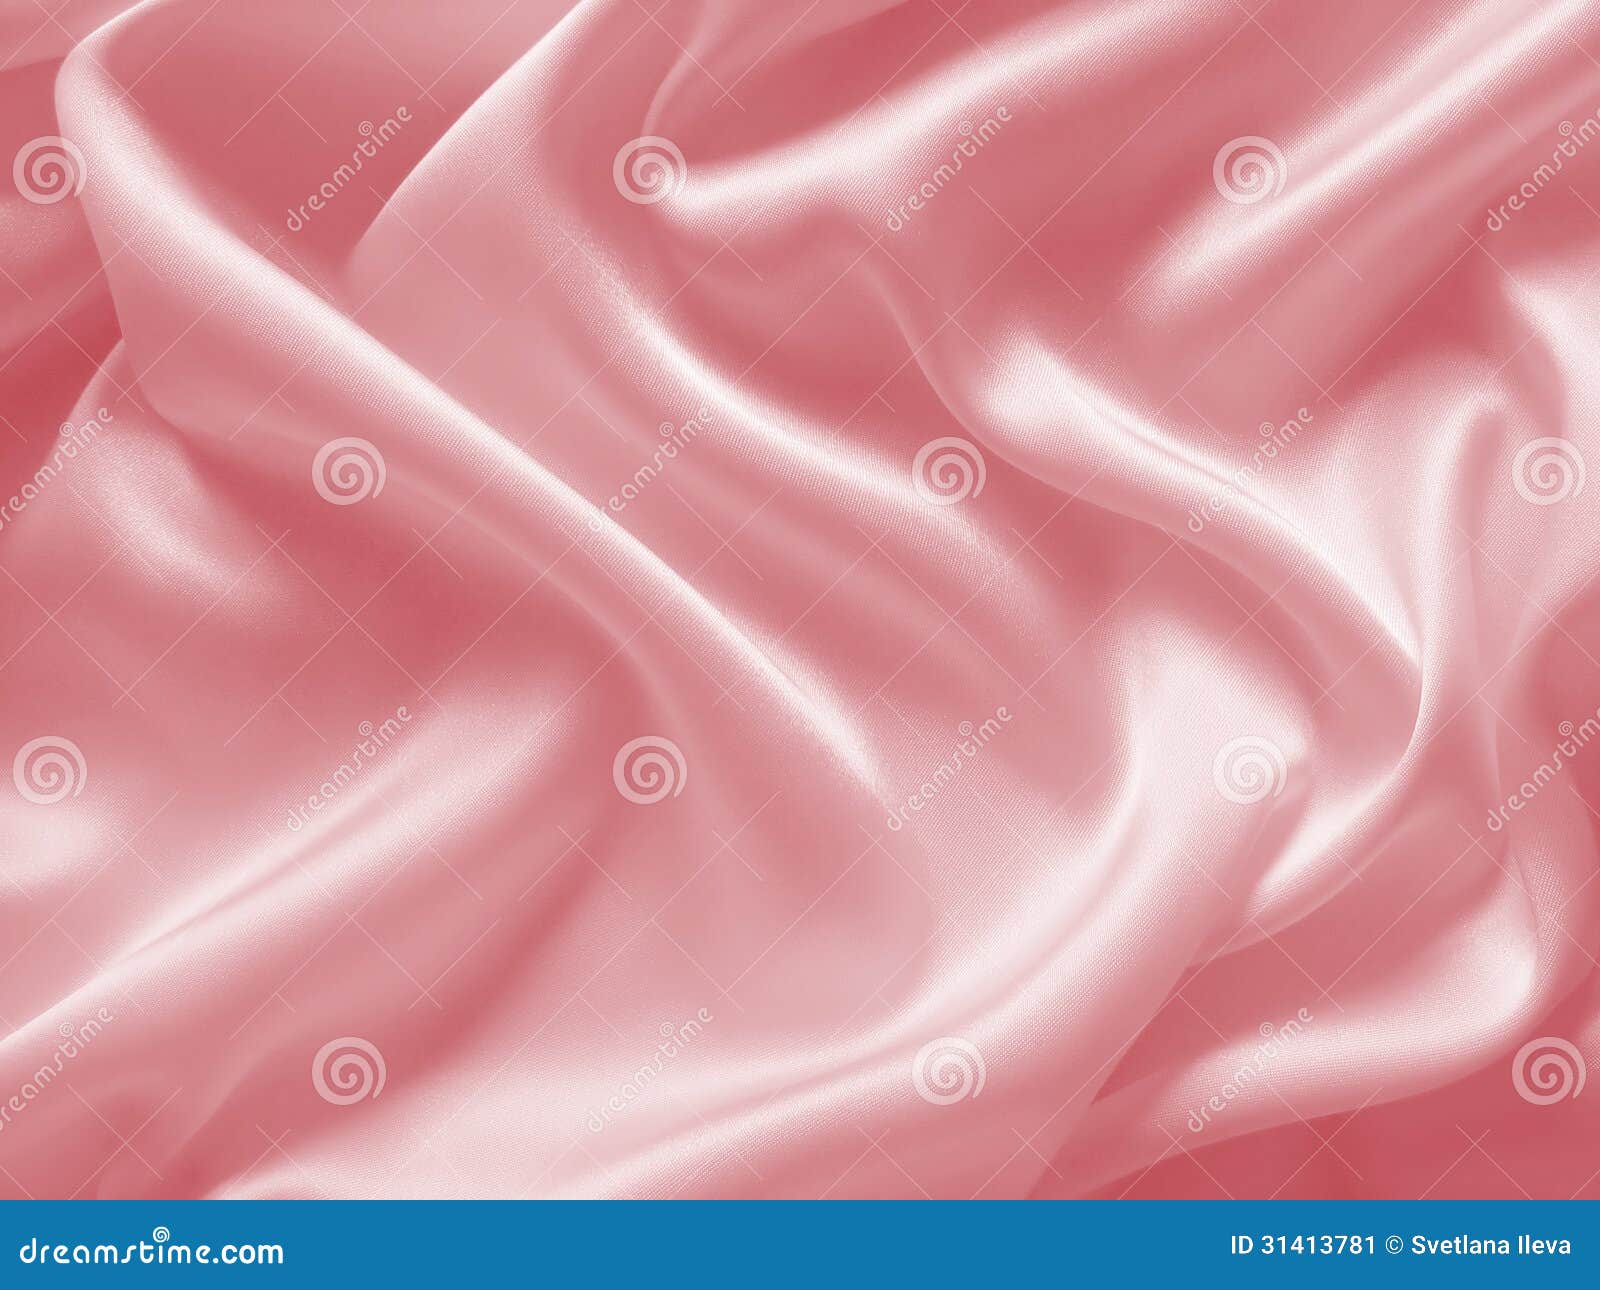 draped pink silk background